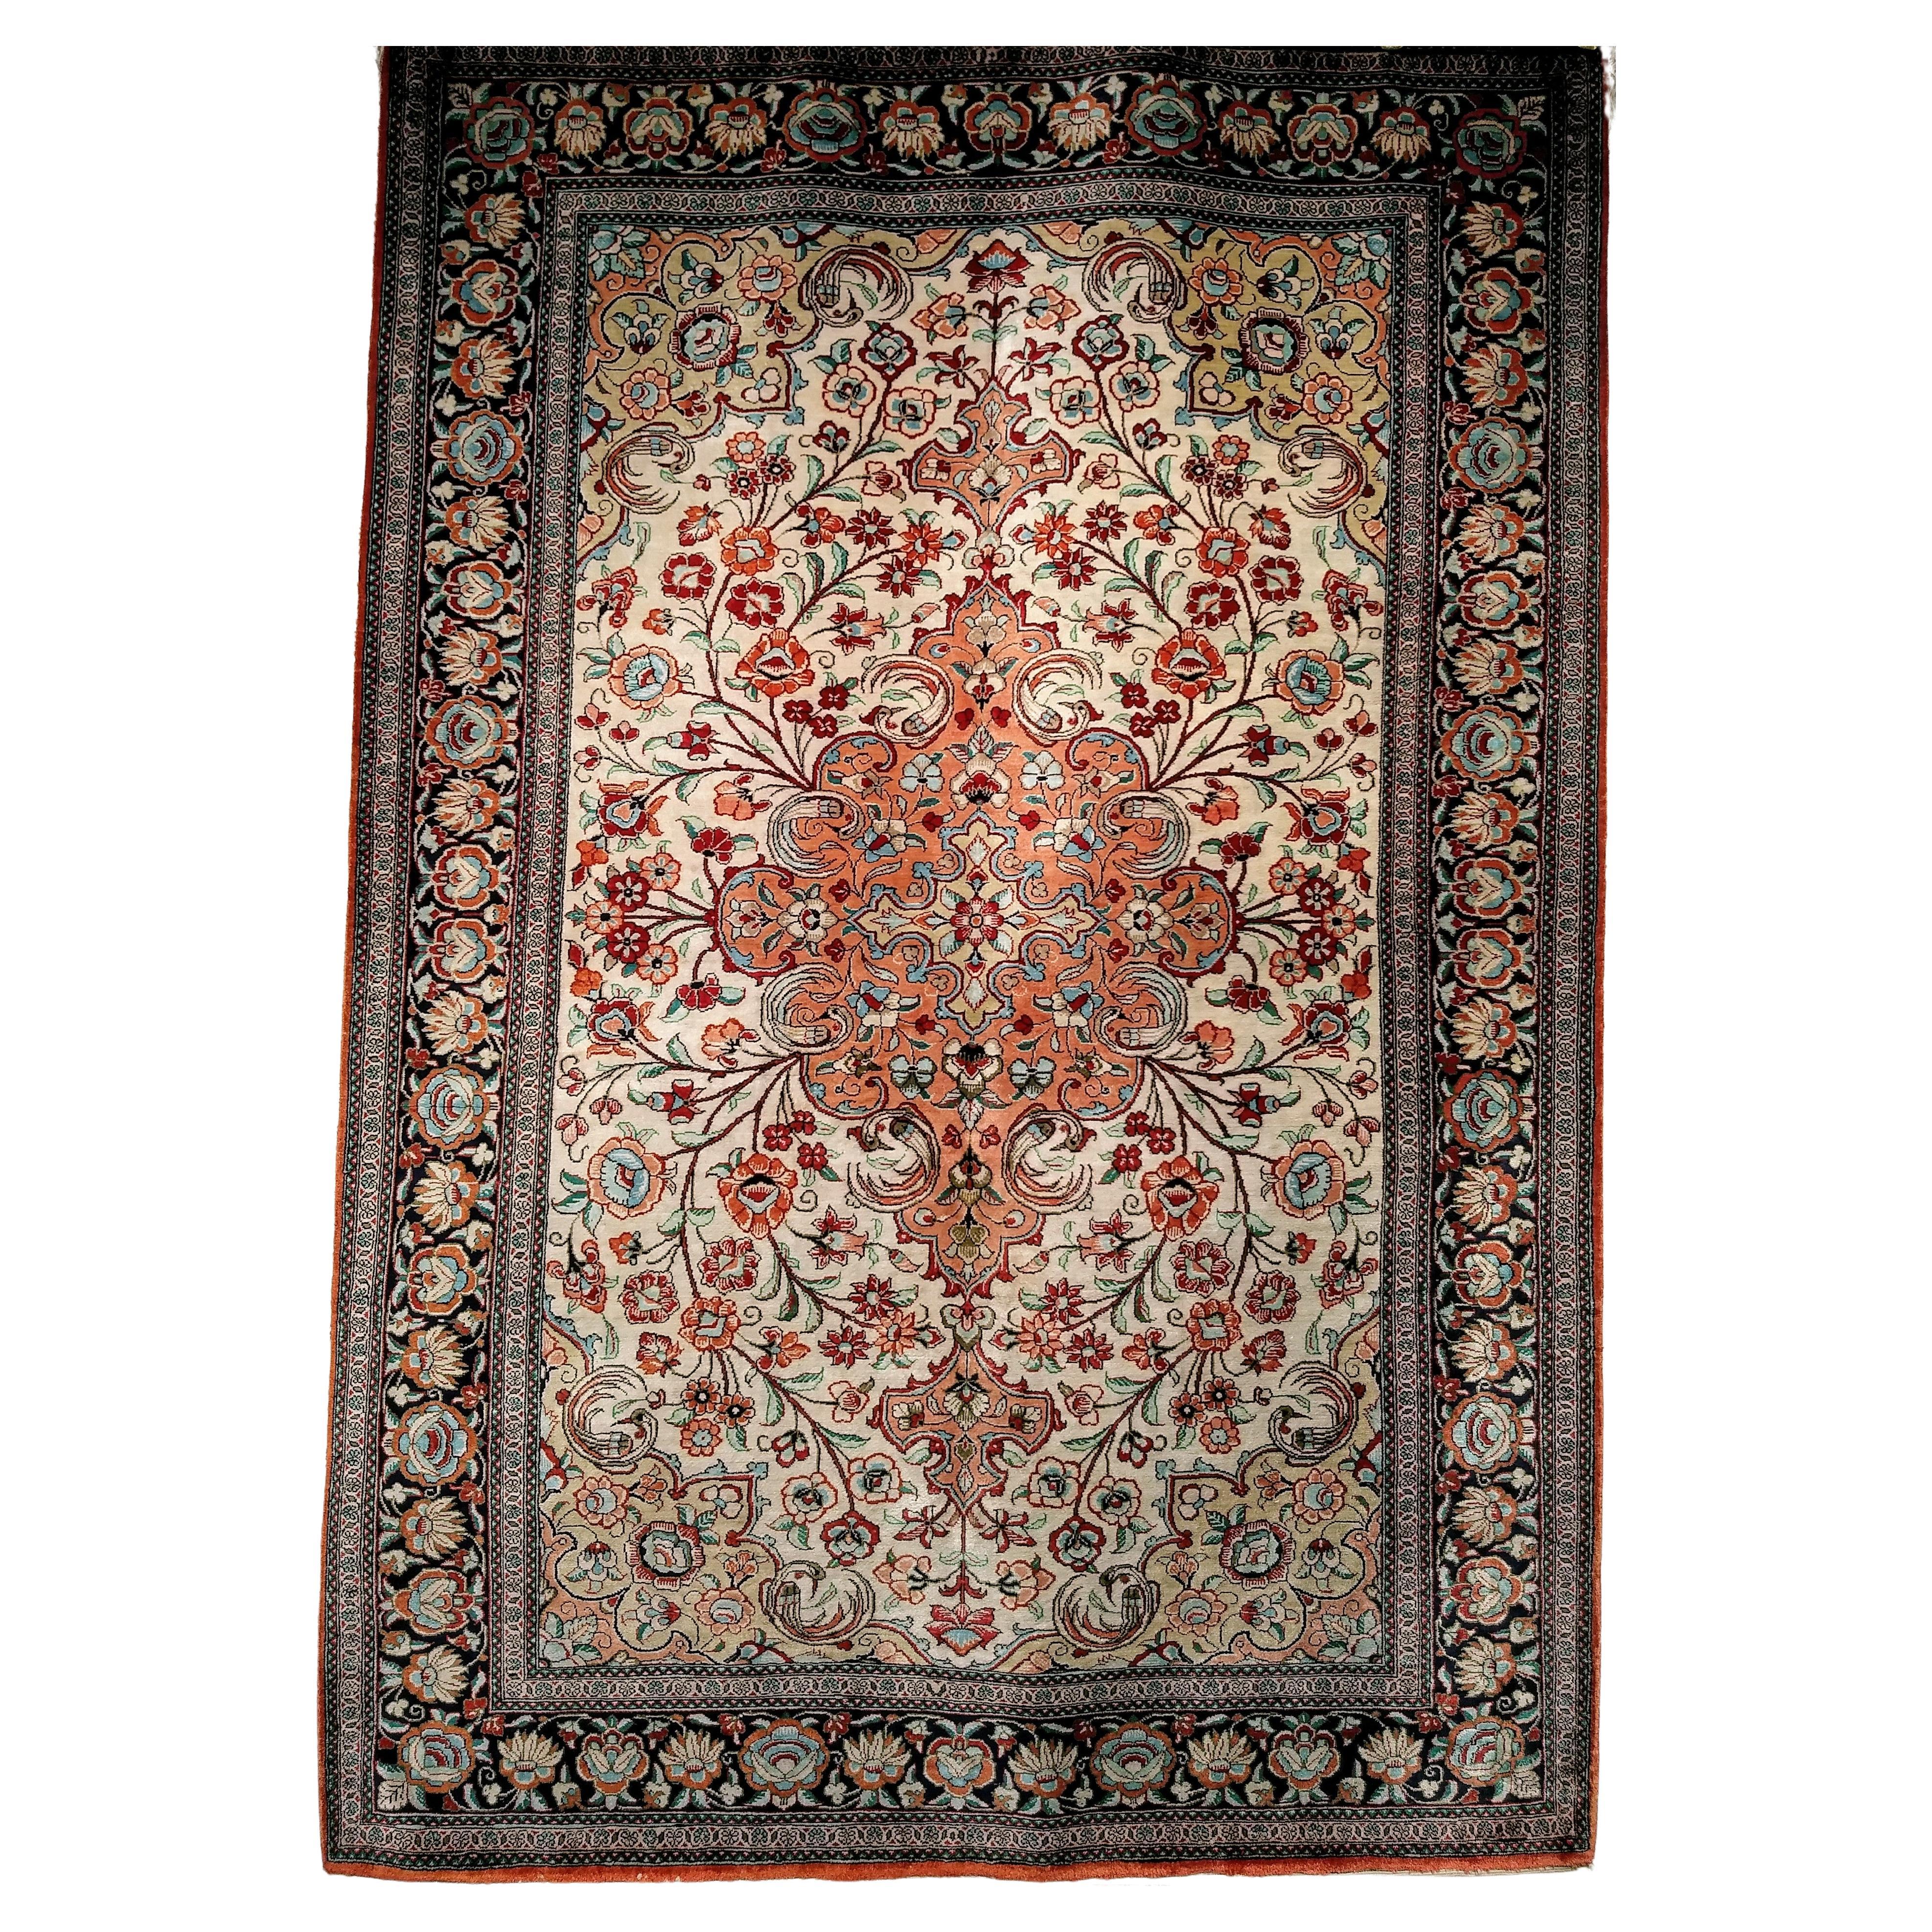 Vintage Persian Silk Qum Area Rug in Floral Pattern in Ivory, Rust, Camel, Navy